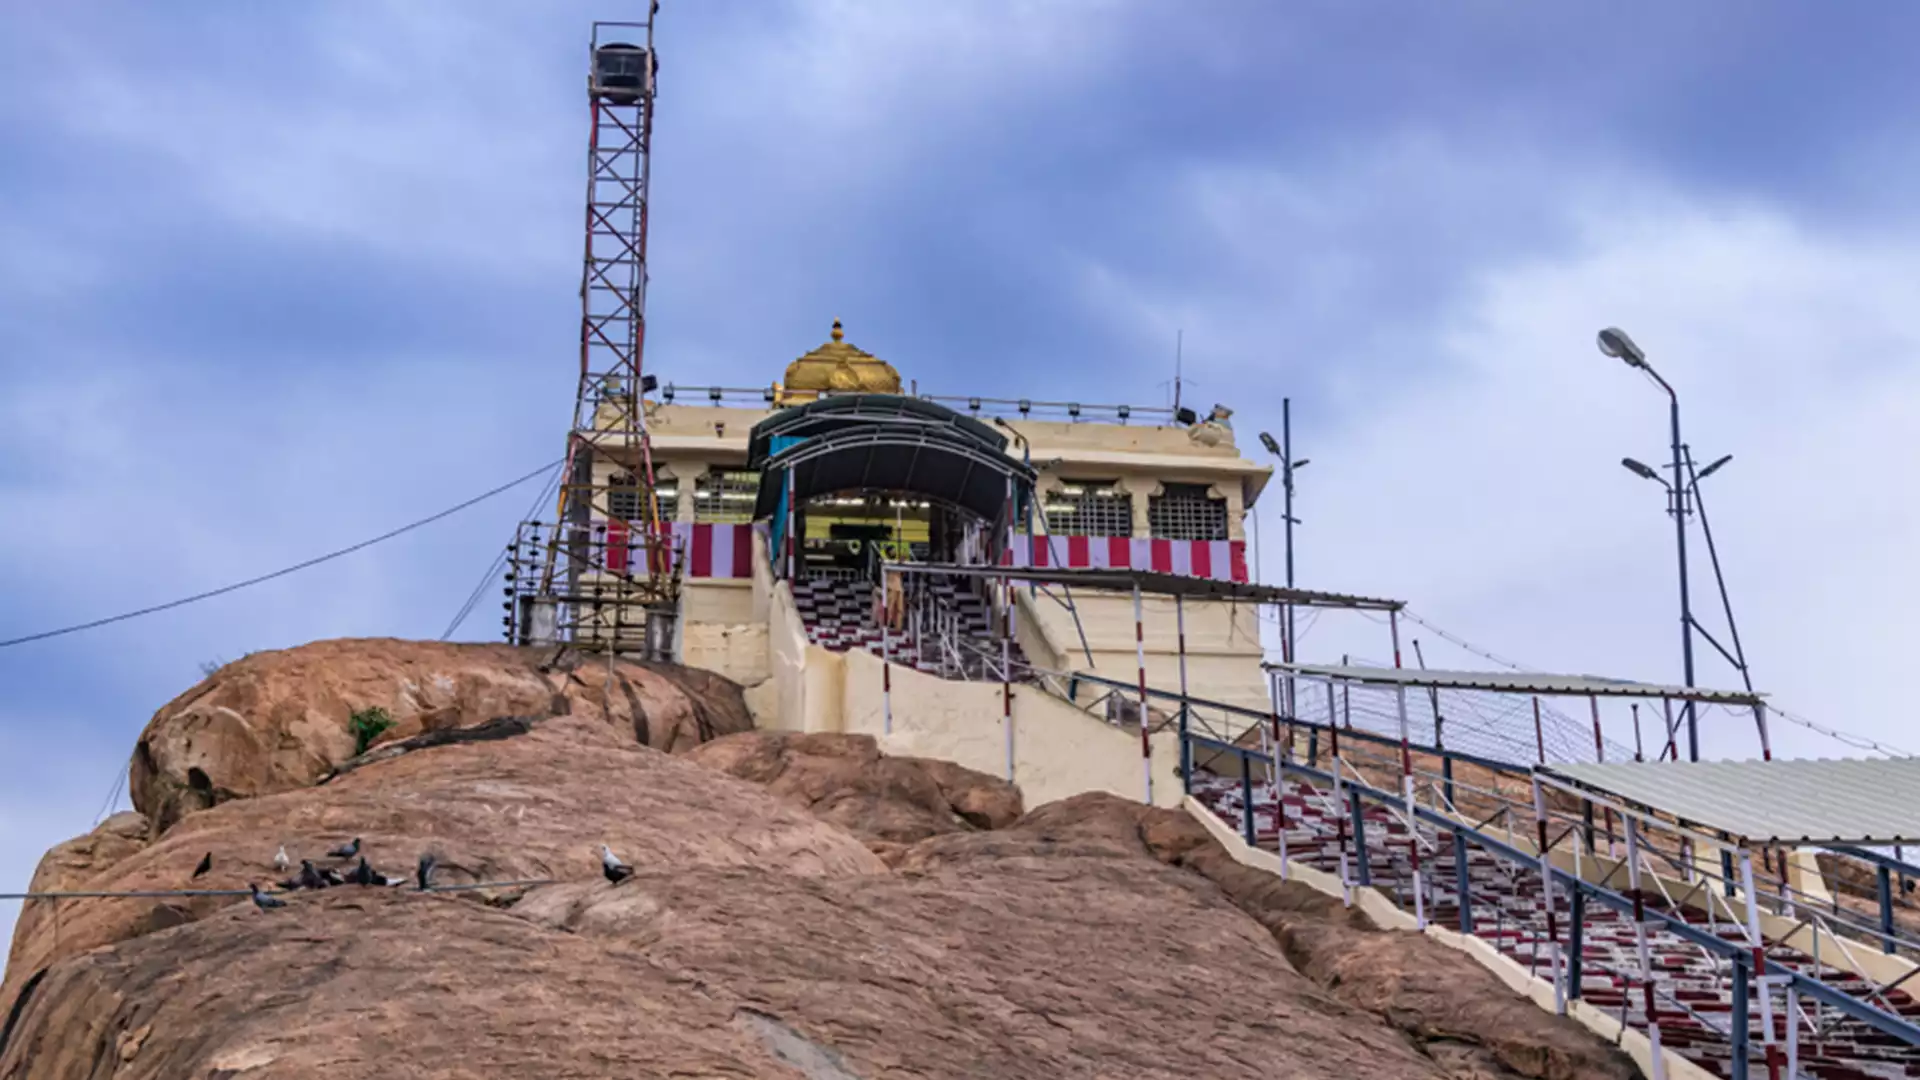 Uchippillaiyar Temple, Rock Fort